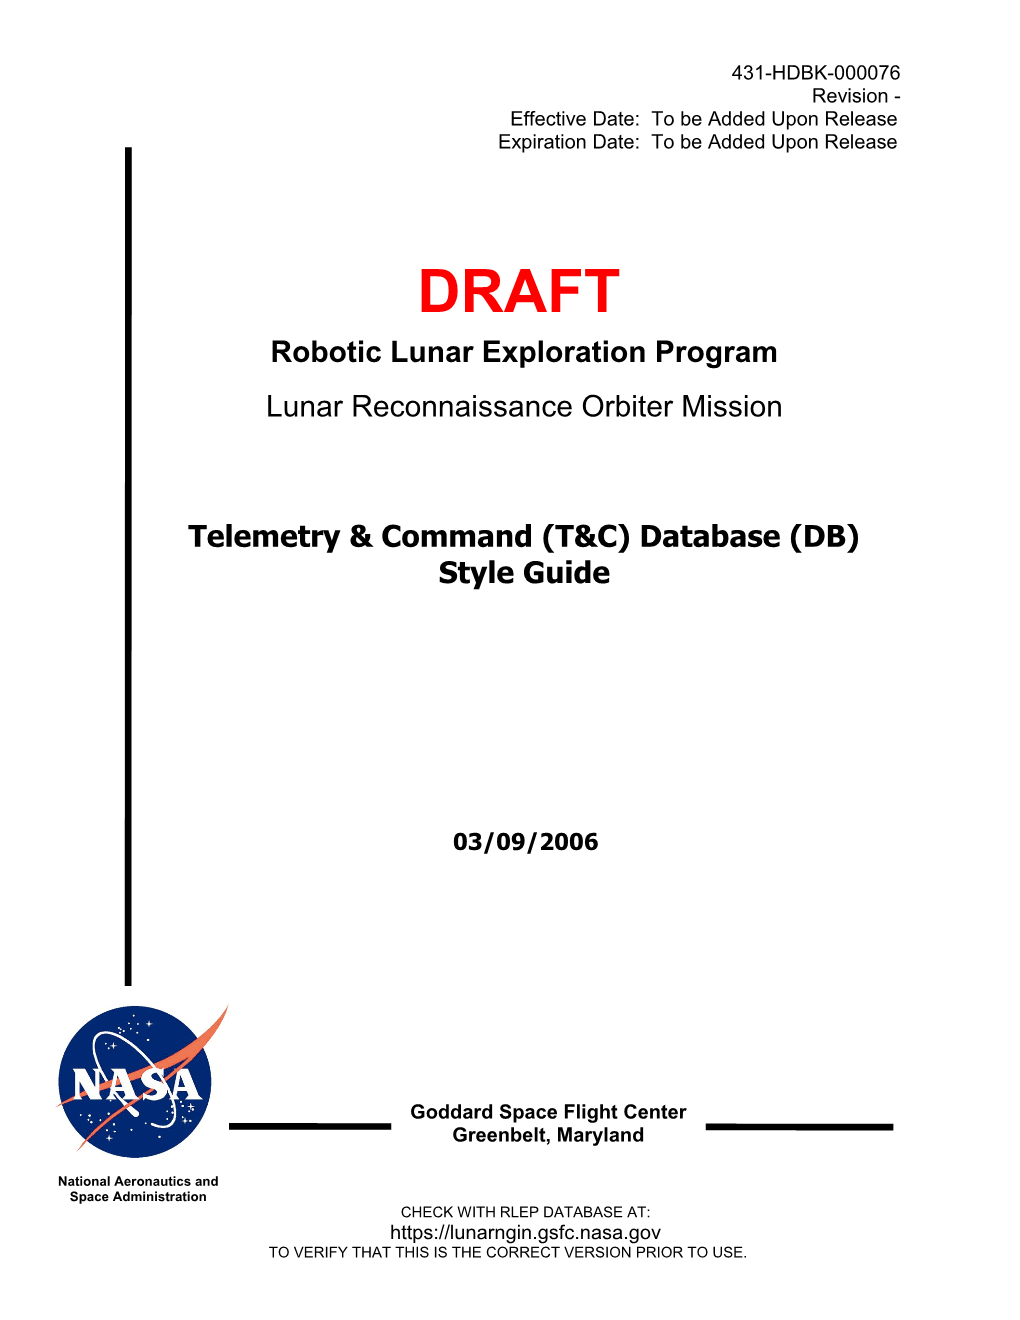 LRO Mission Operations Plan